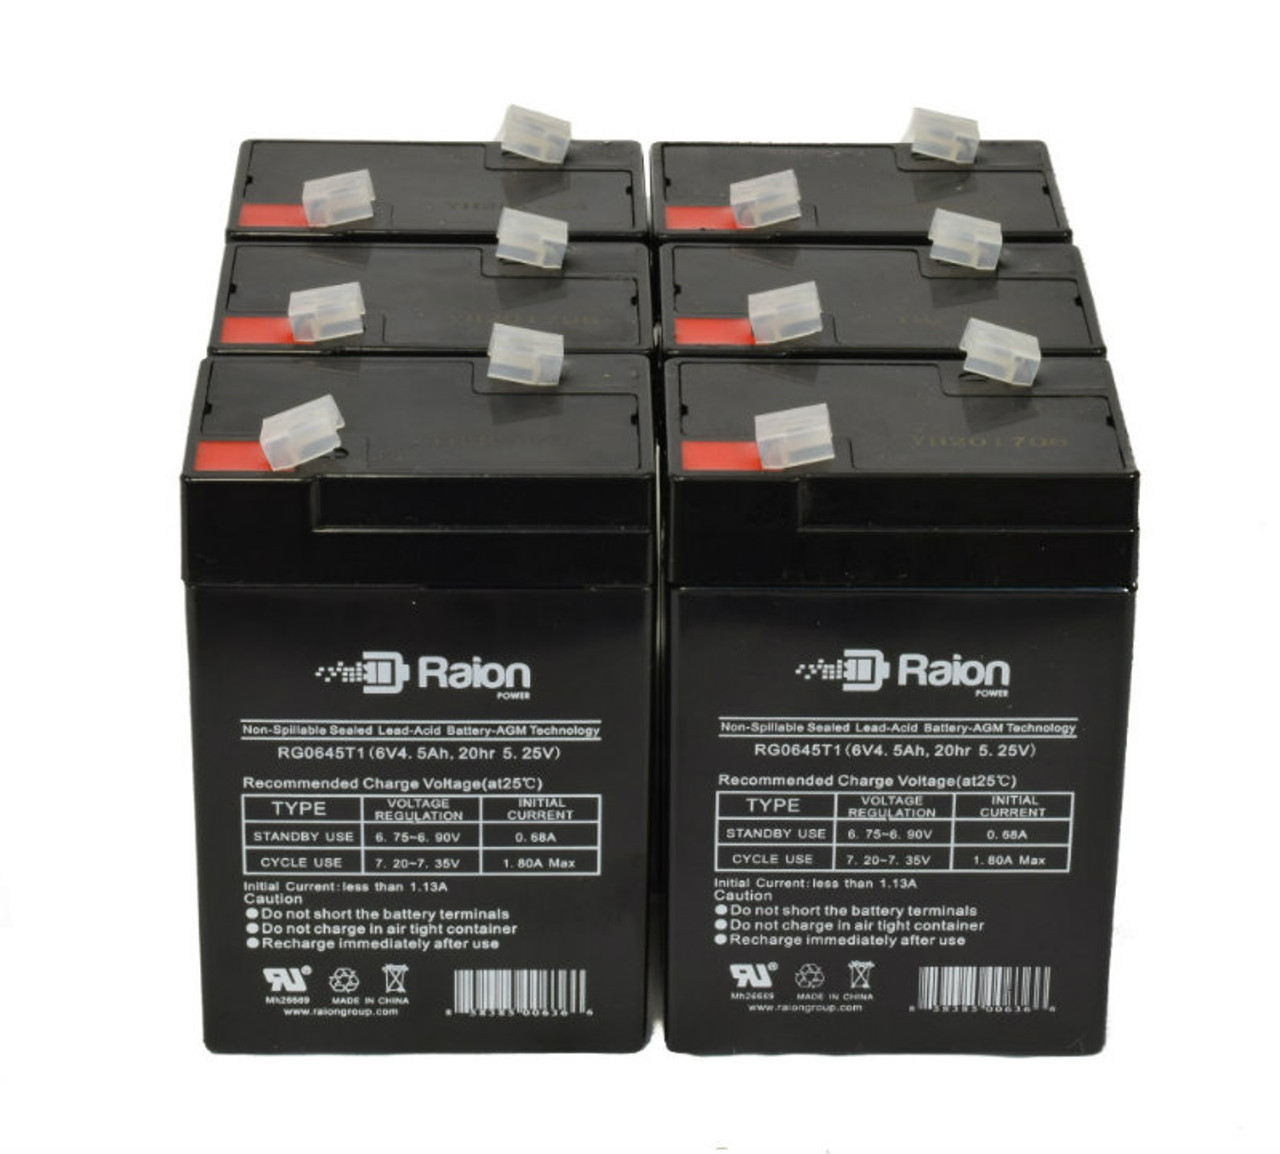 Raion Power 6V 4.5Ah Replacement Emergency Light Battery for JohnLite 8166NS - 6 Pack